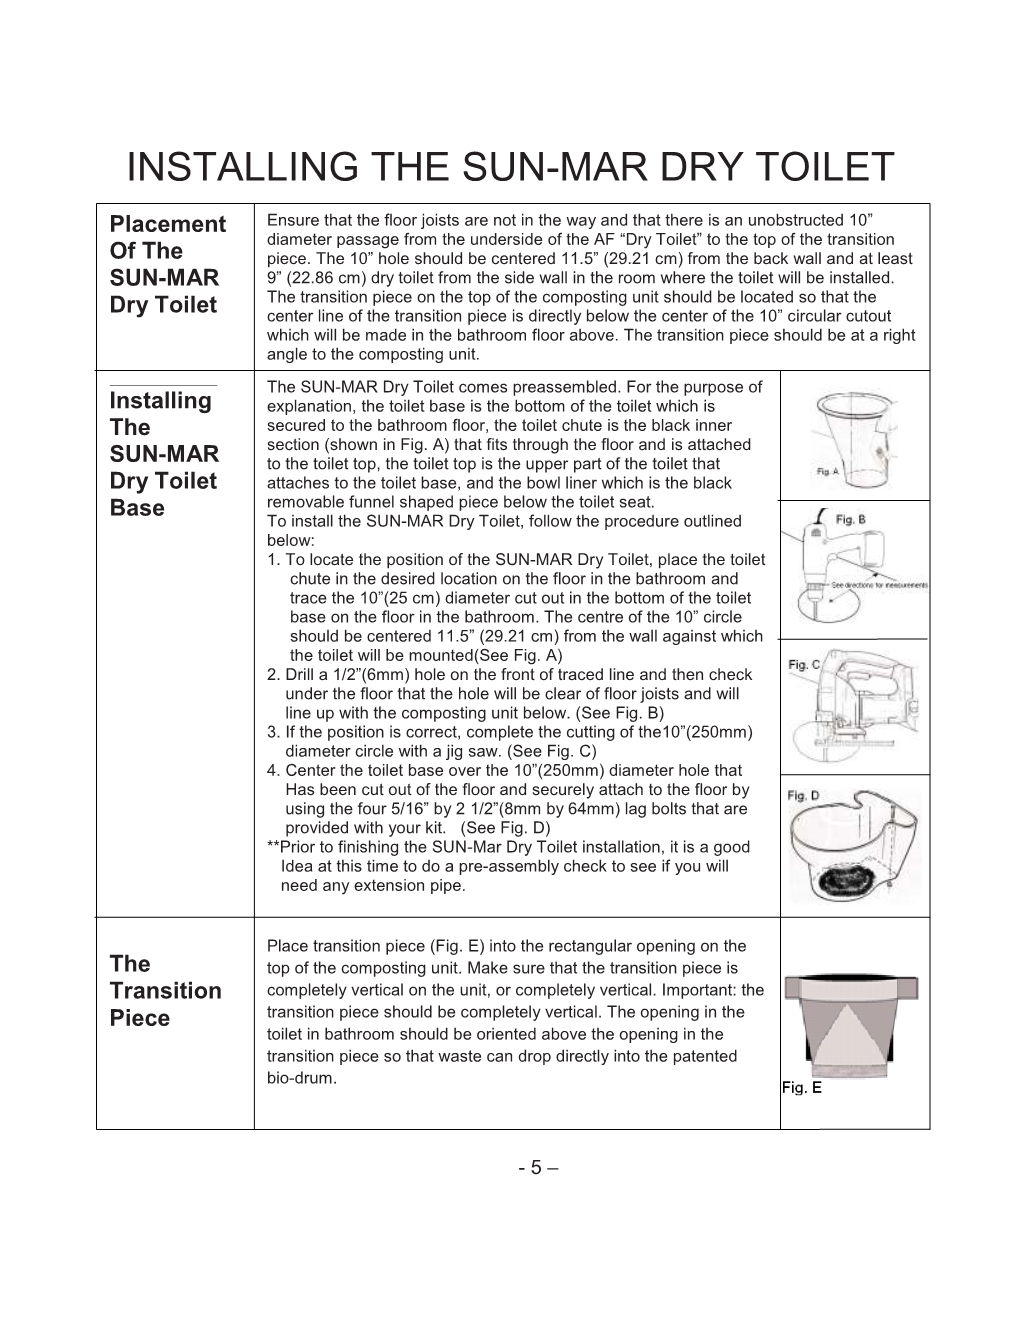 Installing the Sun-Mar Dry Toilet